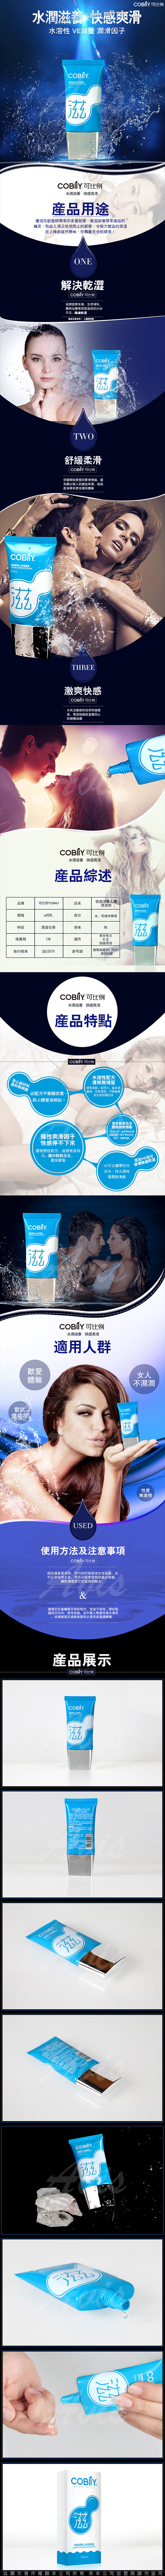 COBILY可比 水溶性人體潤滑液 45ml 滋養型